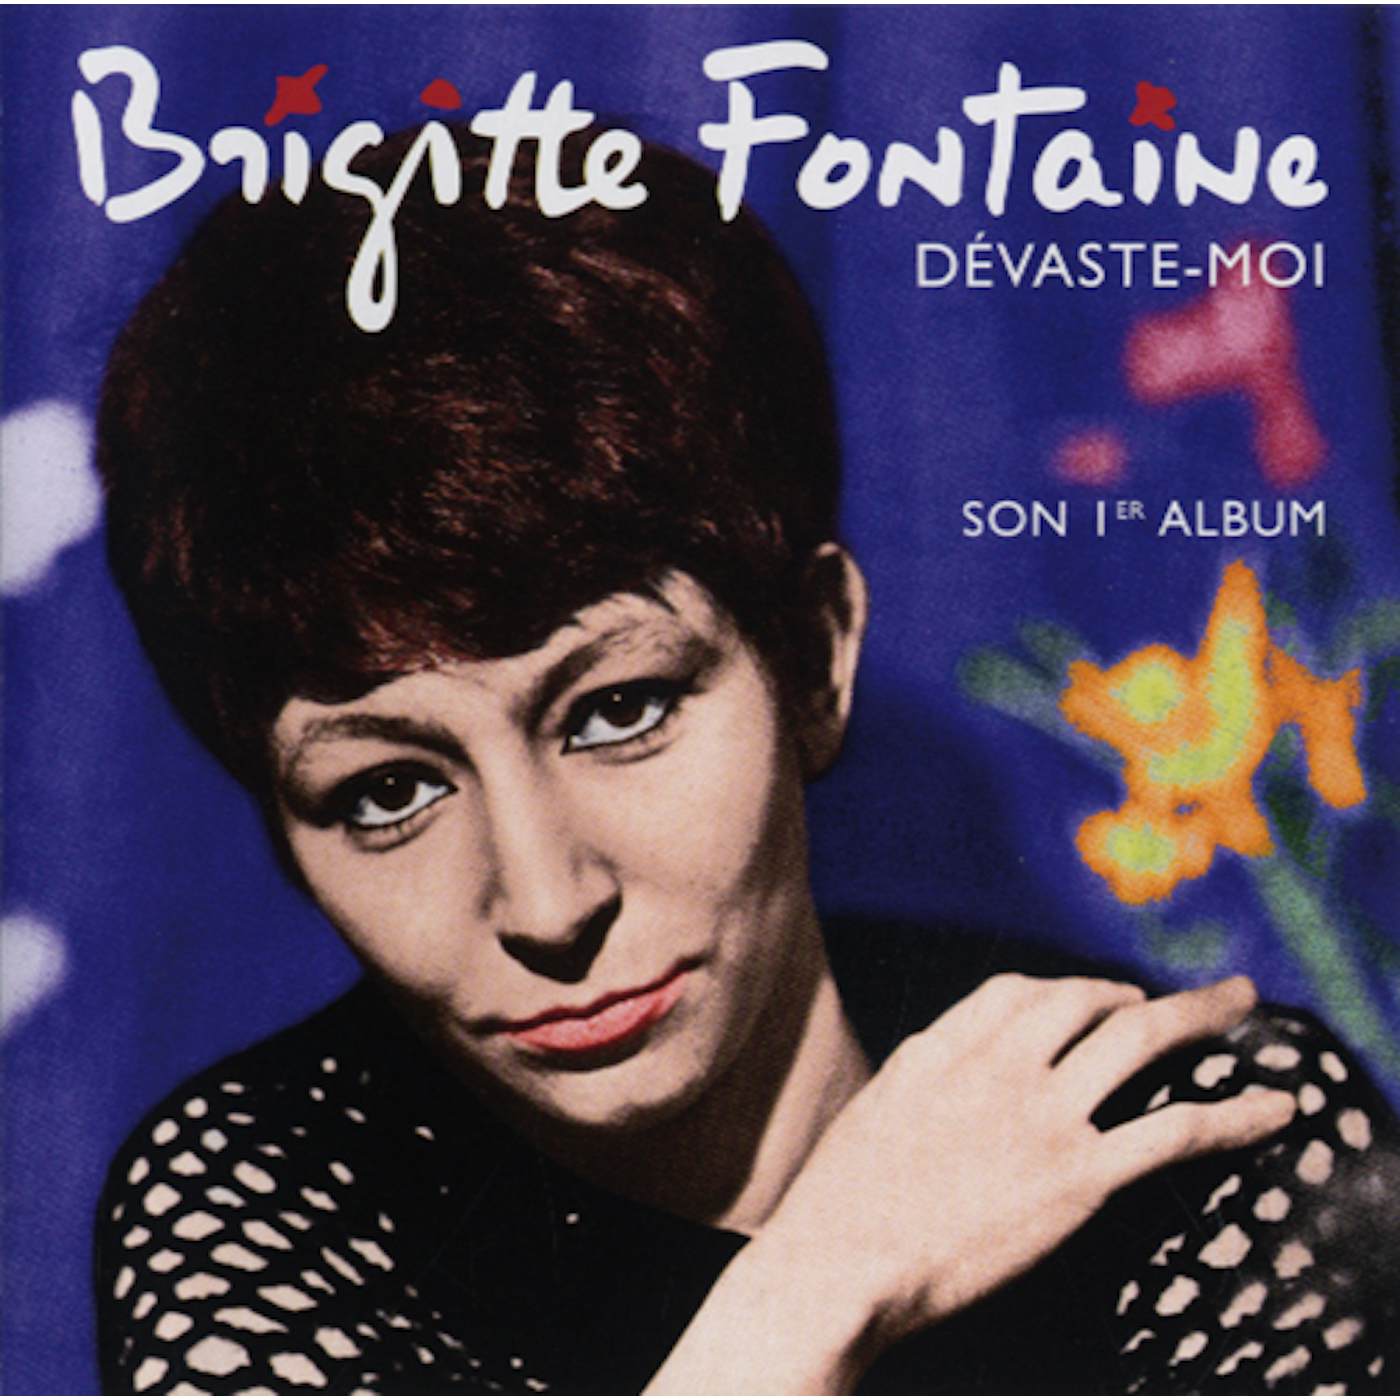 Brigitte Fontaine DEVASTE-MOI CD